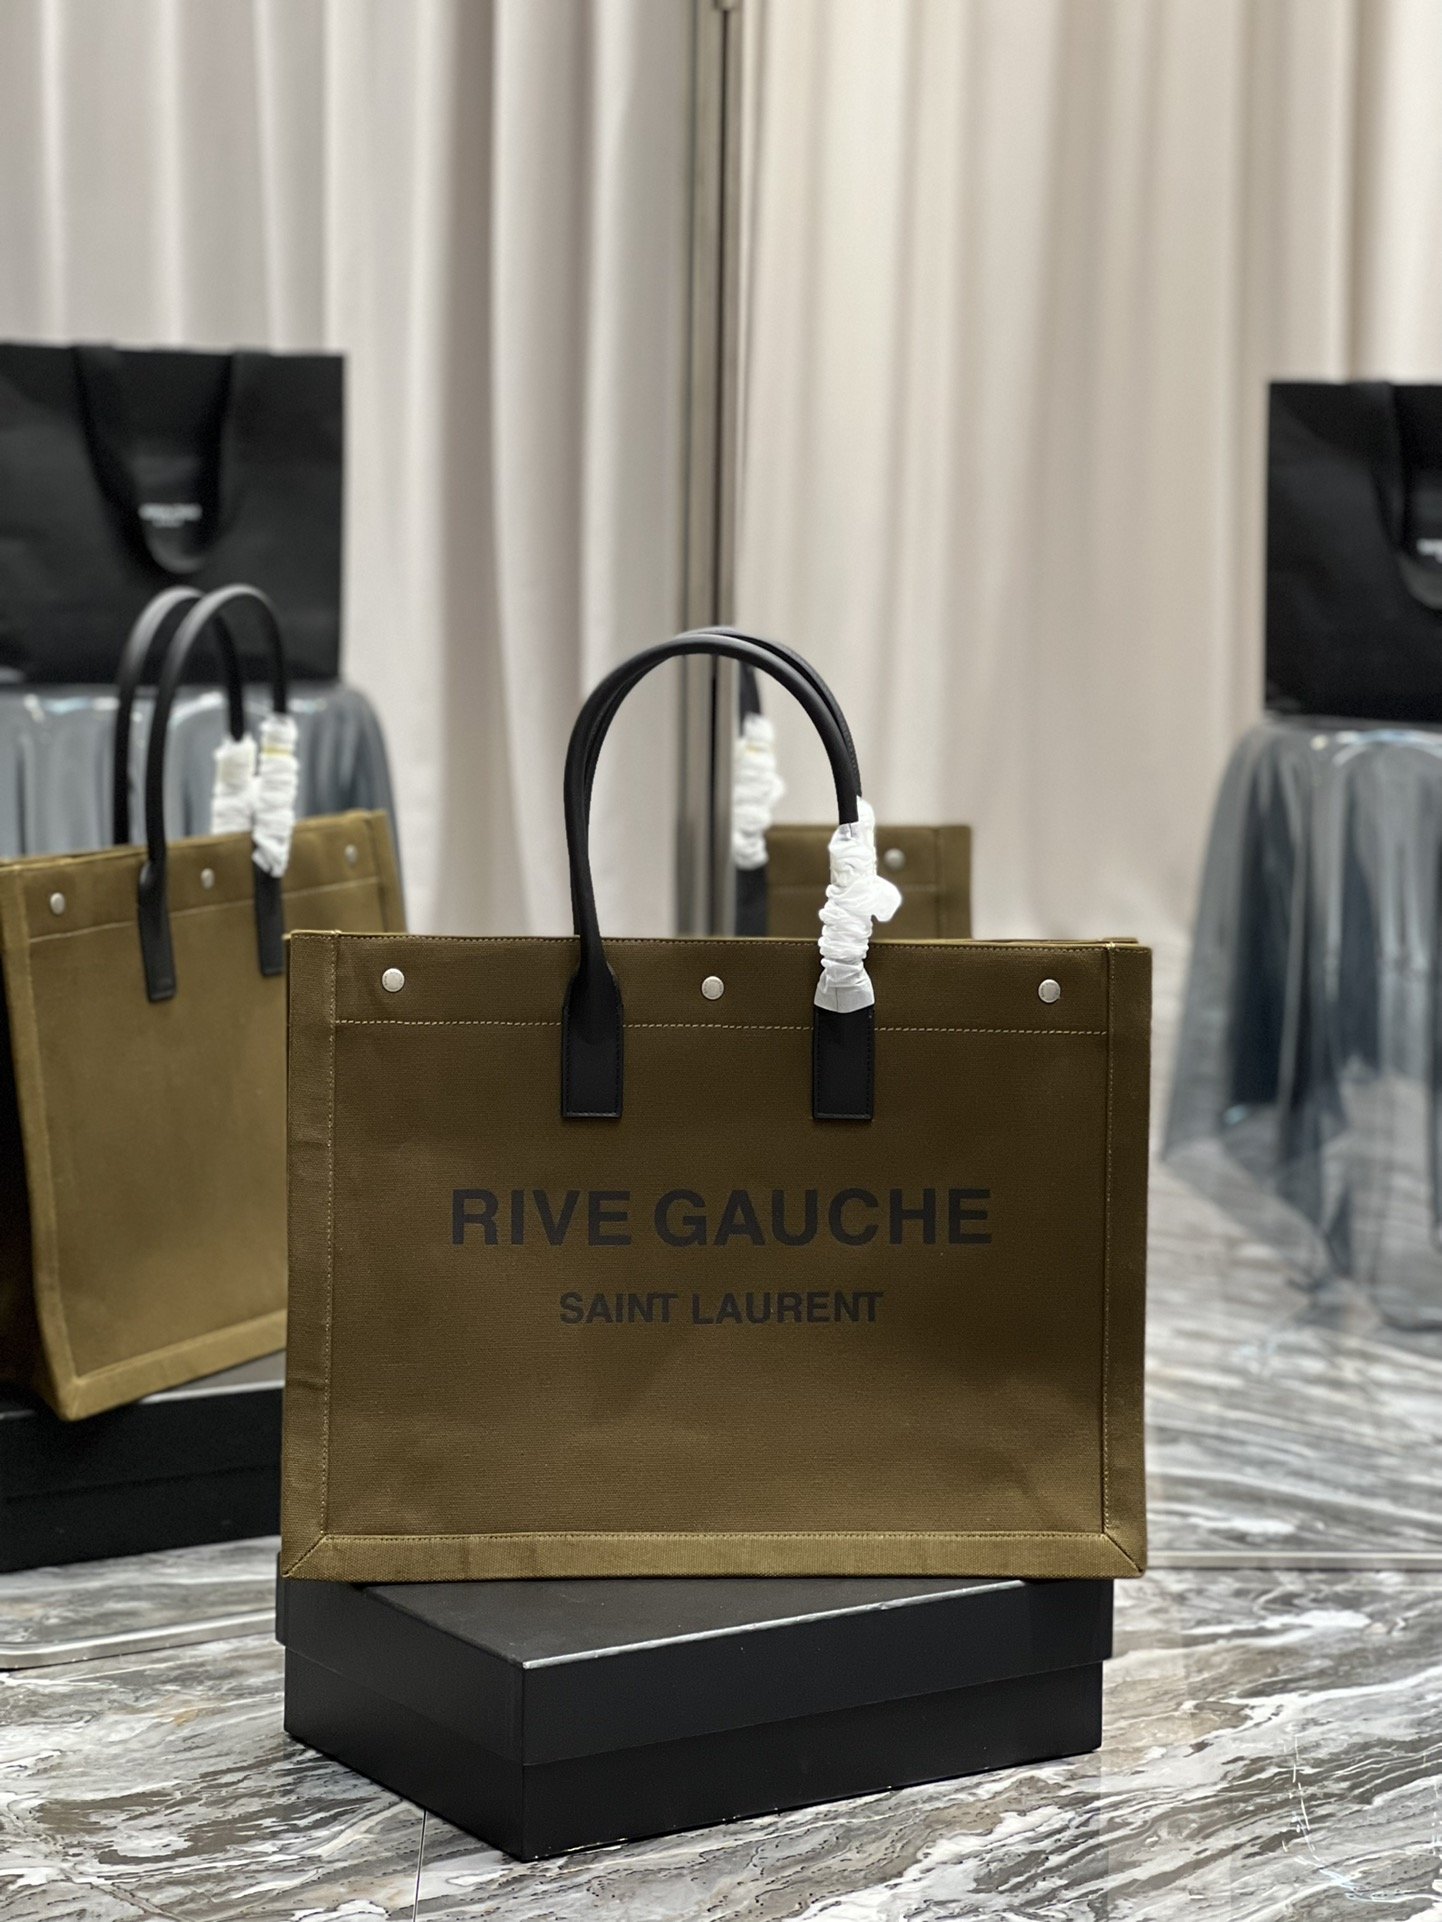 A bag Rive Gauche Tote Bag 48 cm